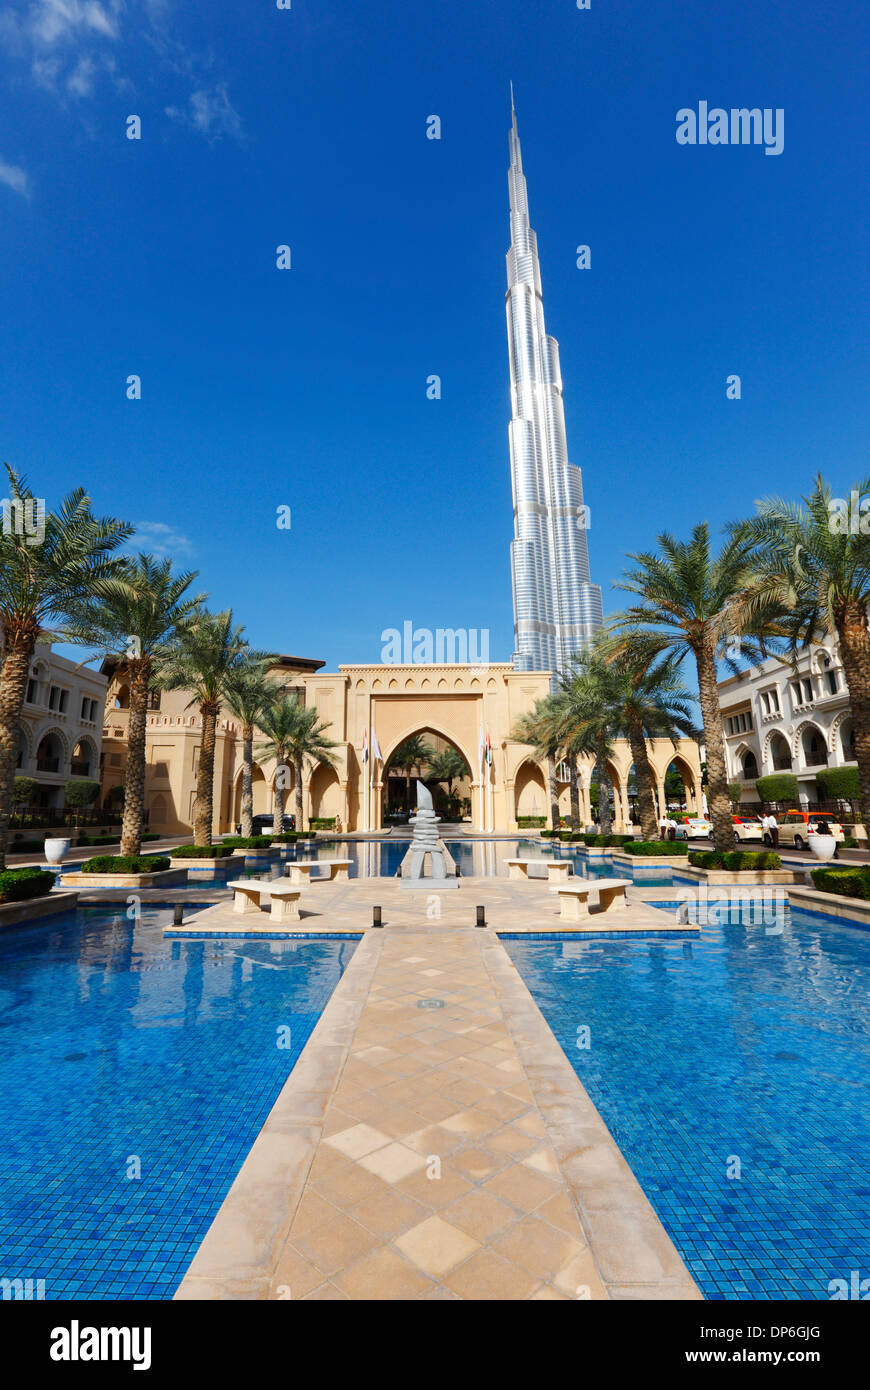 The Hotel Palace, Souk Al Bahar, Dubai Stock Photo